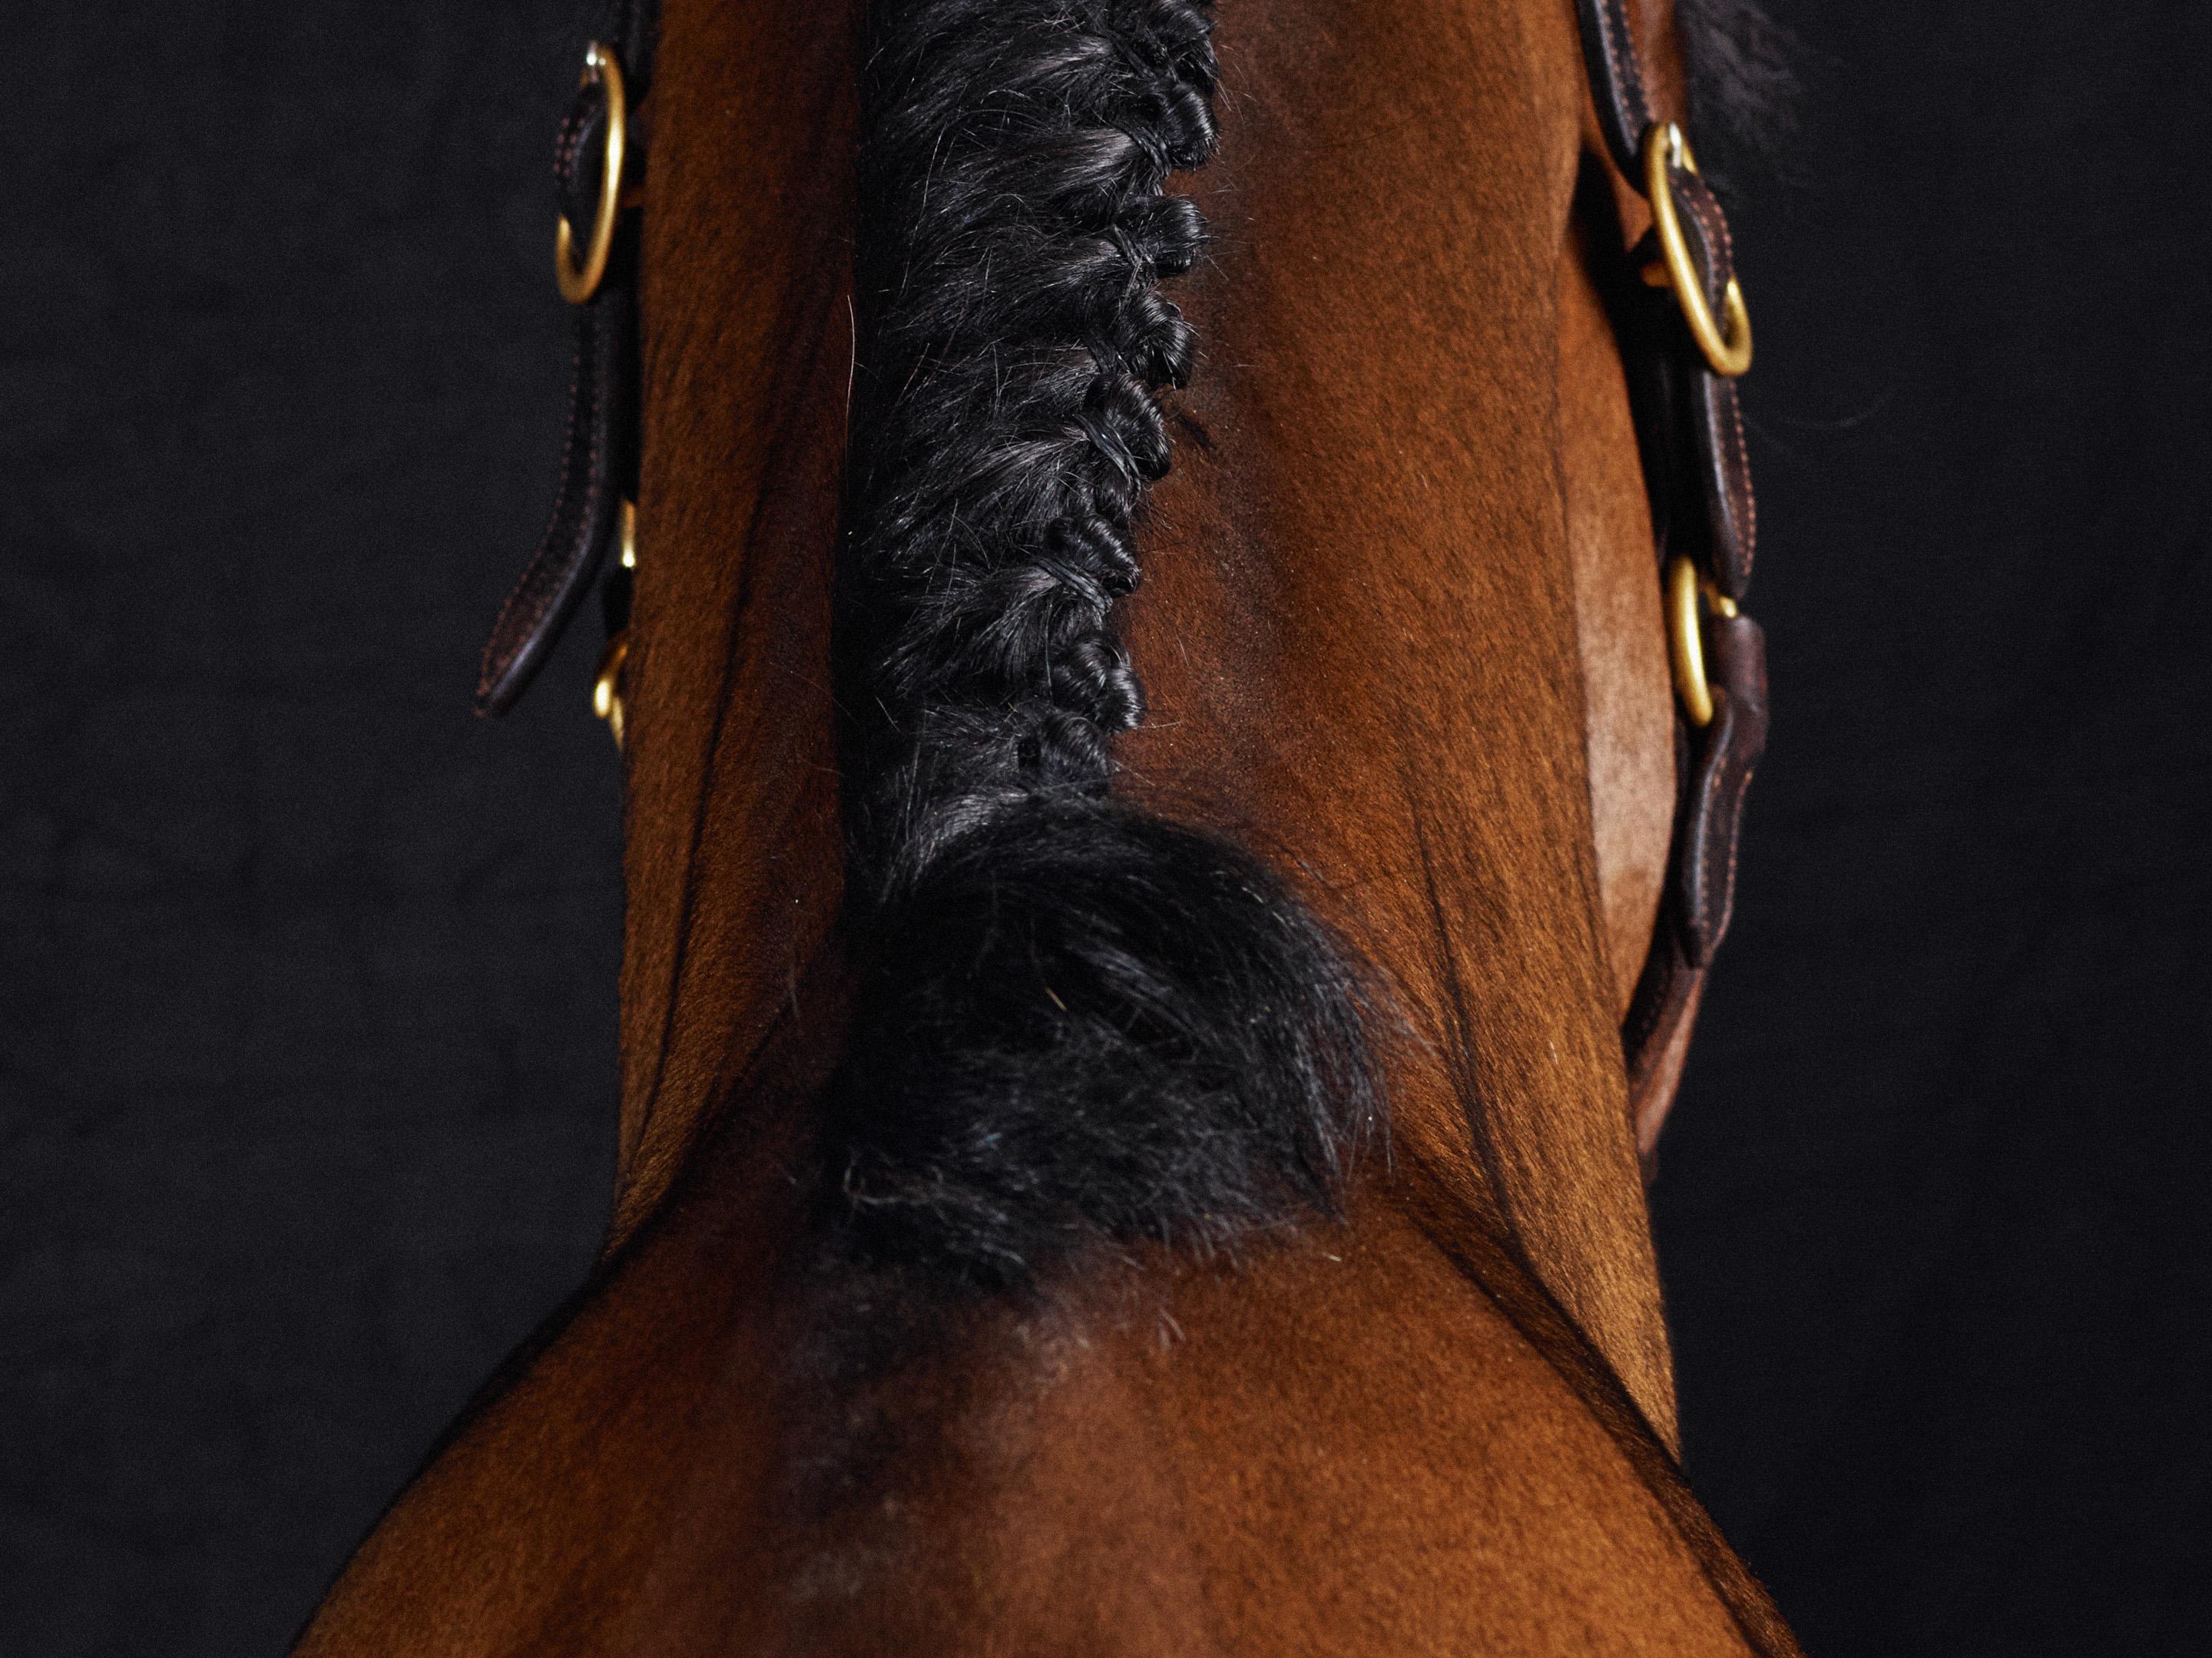 Lamerick II - Full Color Limited Edition Horse Portrait 2015 - Contemporary Photograph by Juan Lamarca